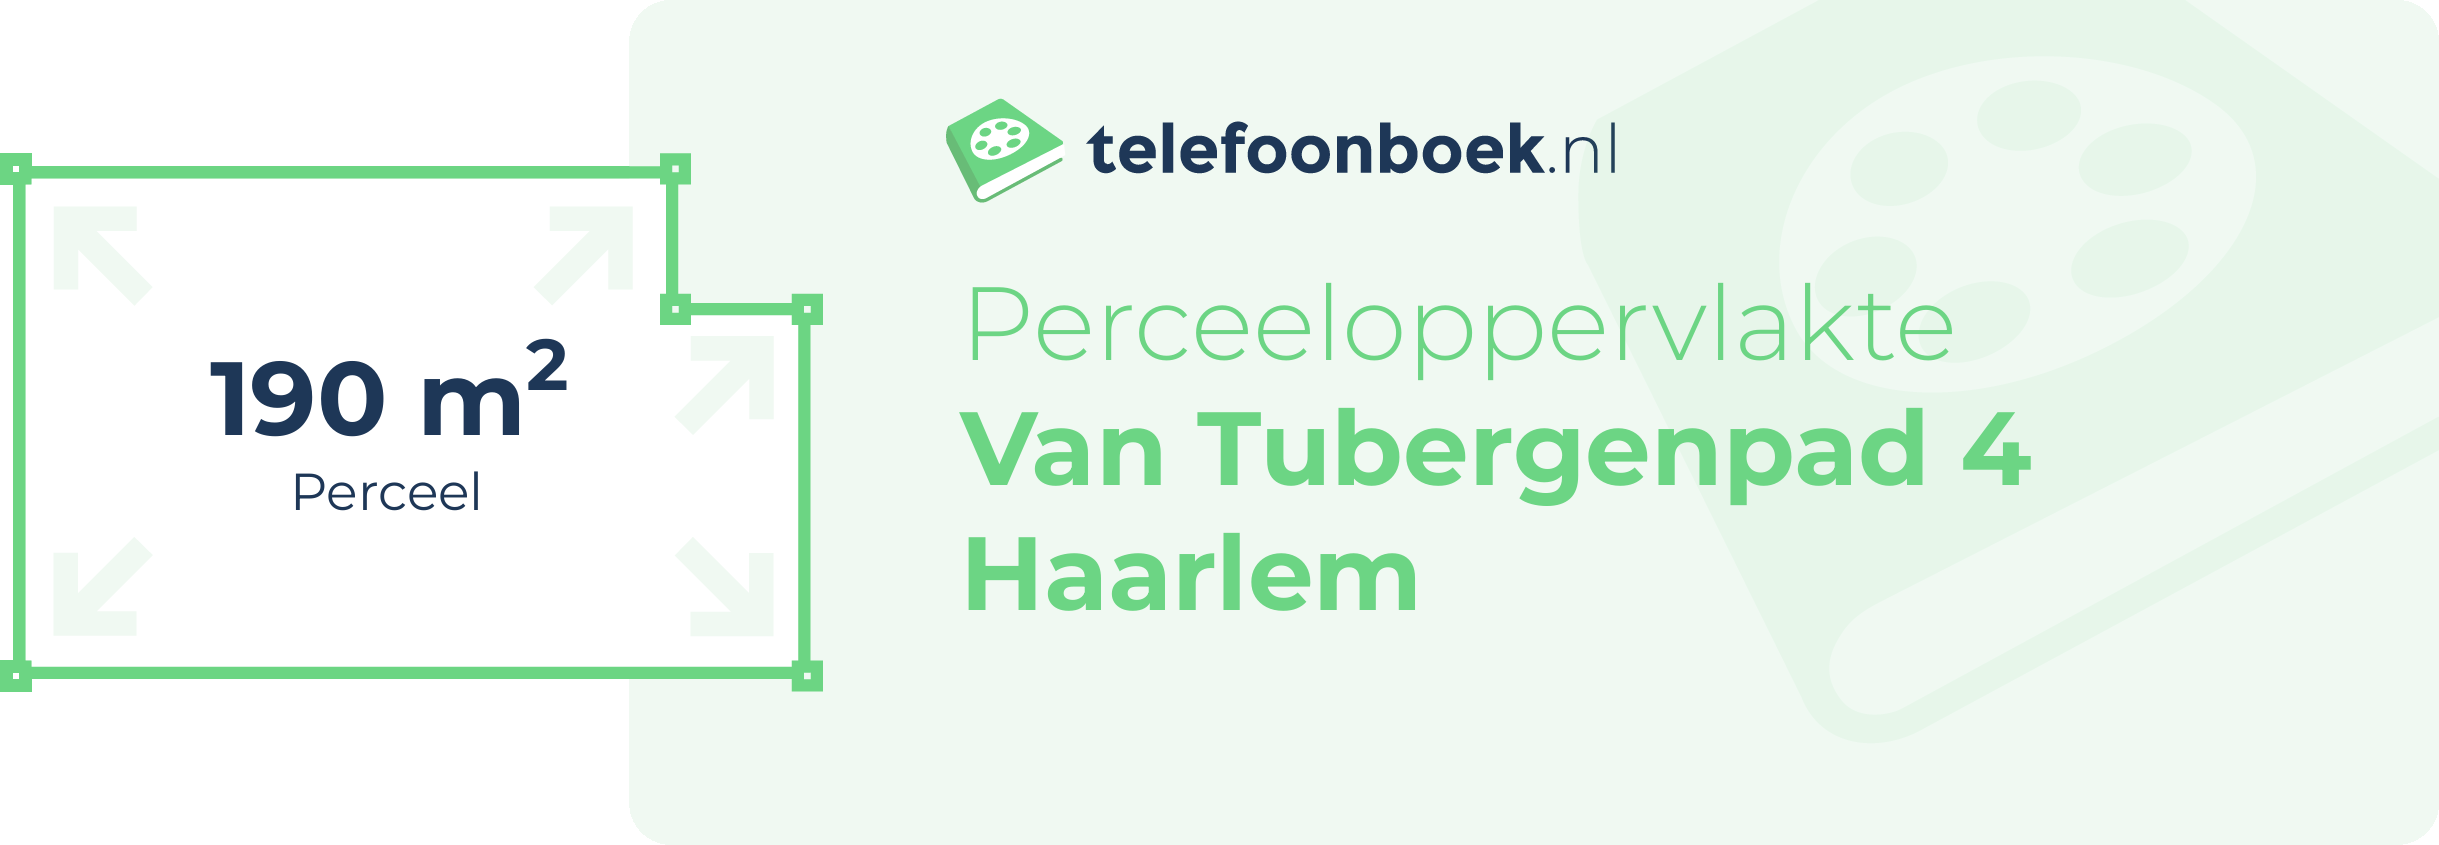 Perceeloppervlakte Van Tubergenpad 4 Haarlem